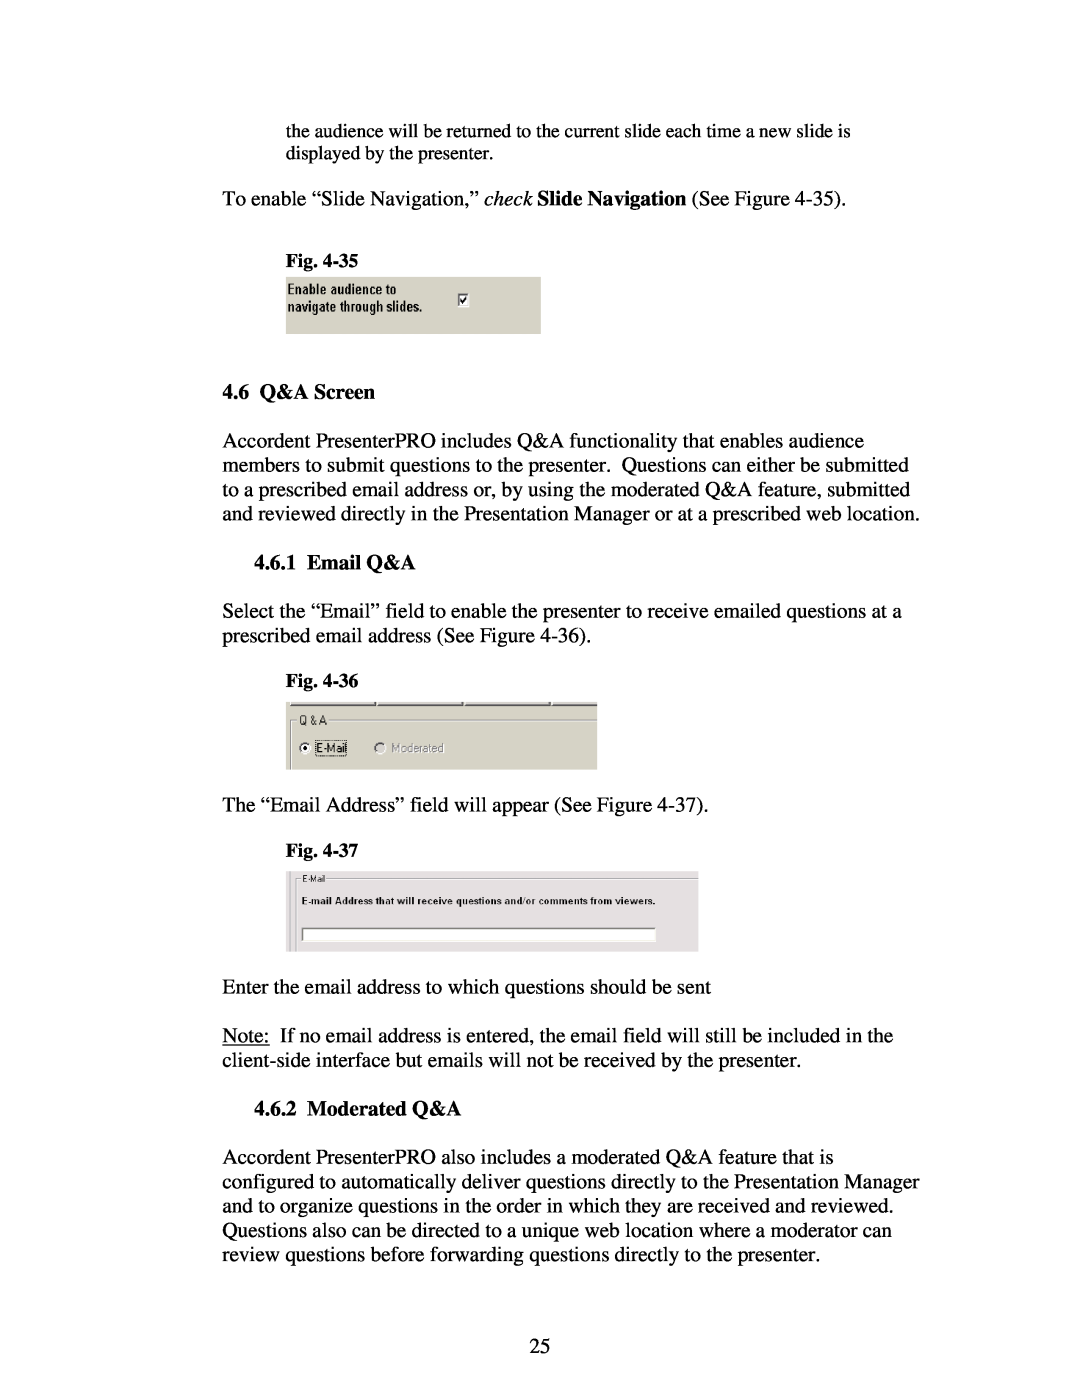 Polycom 6.1 user manual 4.6 Q&A Screen, Email Q&A, Moderated Q&A 